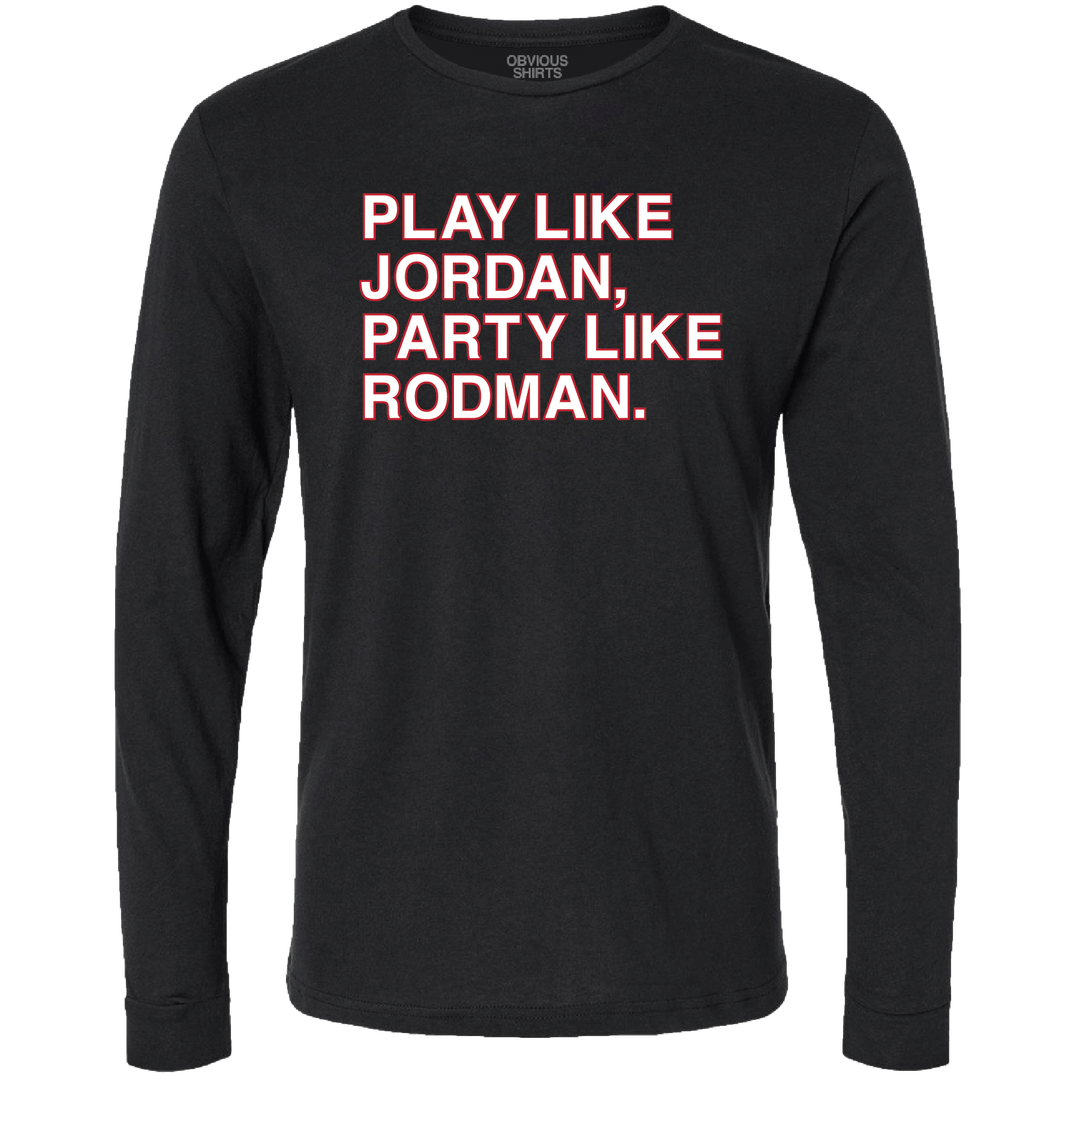 PLAY LIKE JORDAN, PARTY LIKE RODMAN. (LONG SLEEVE) - OBVIOUS SHIRTS